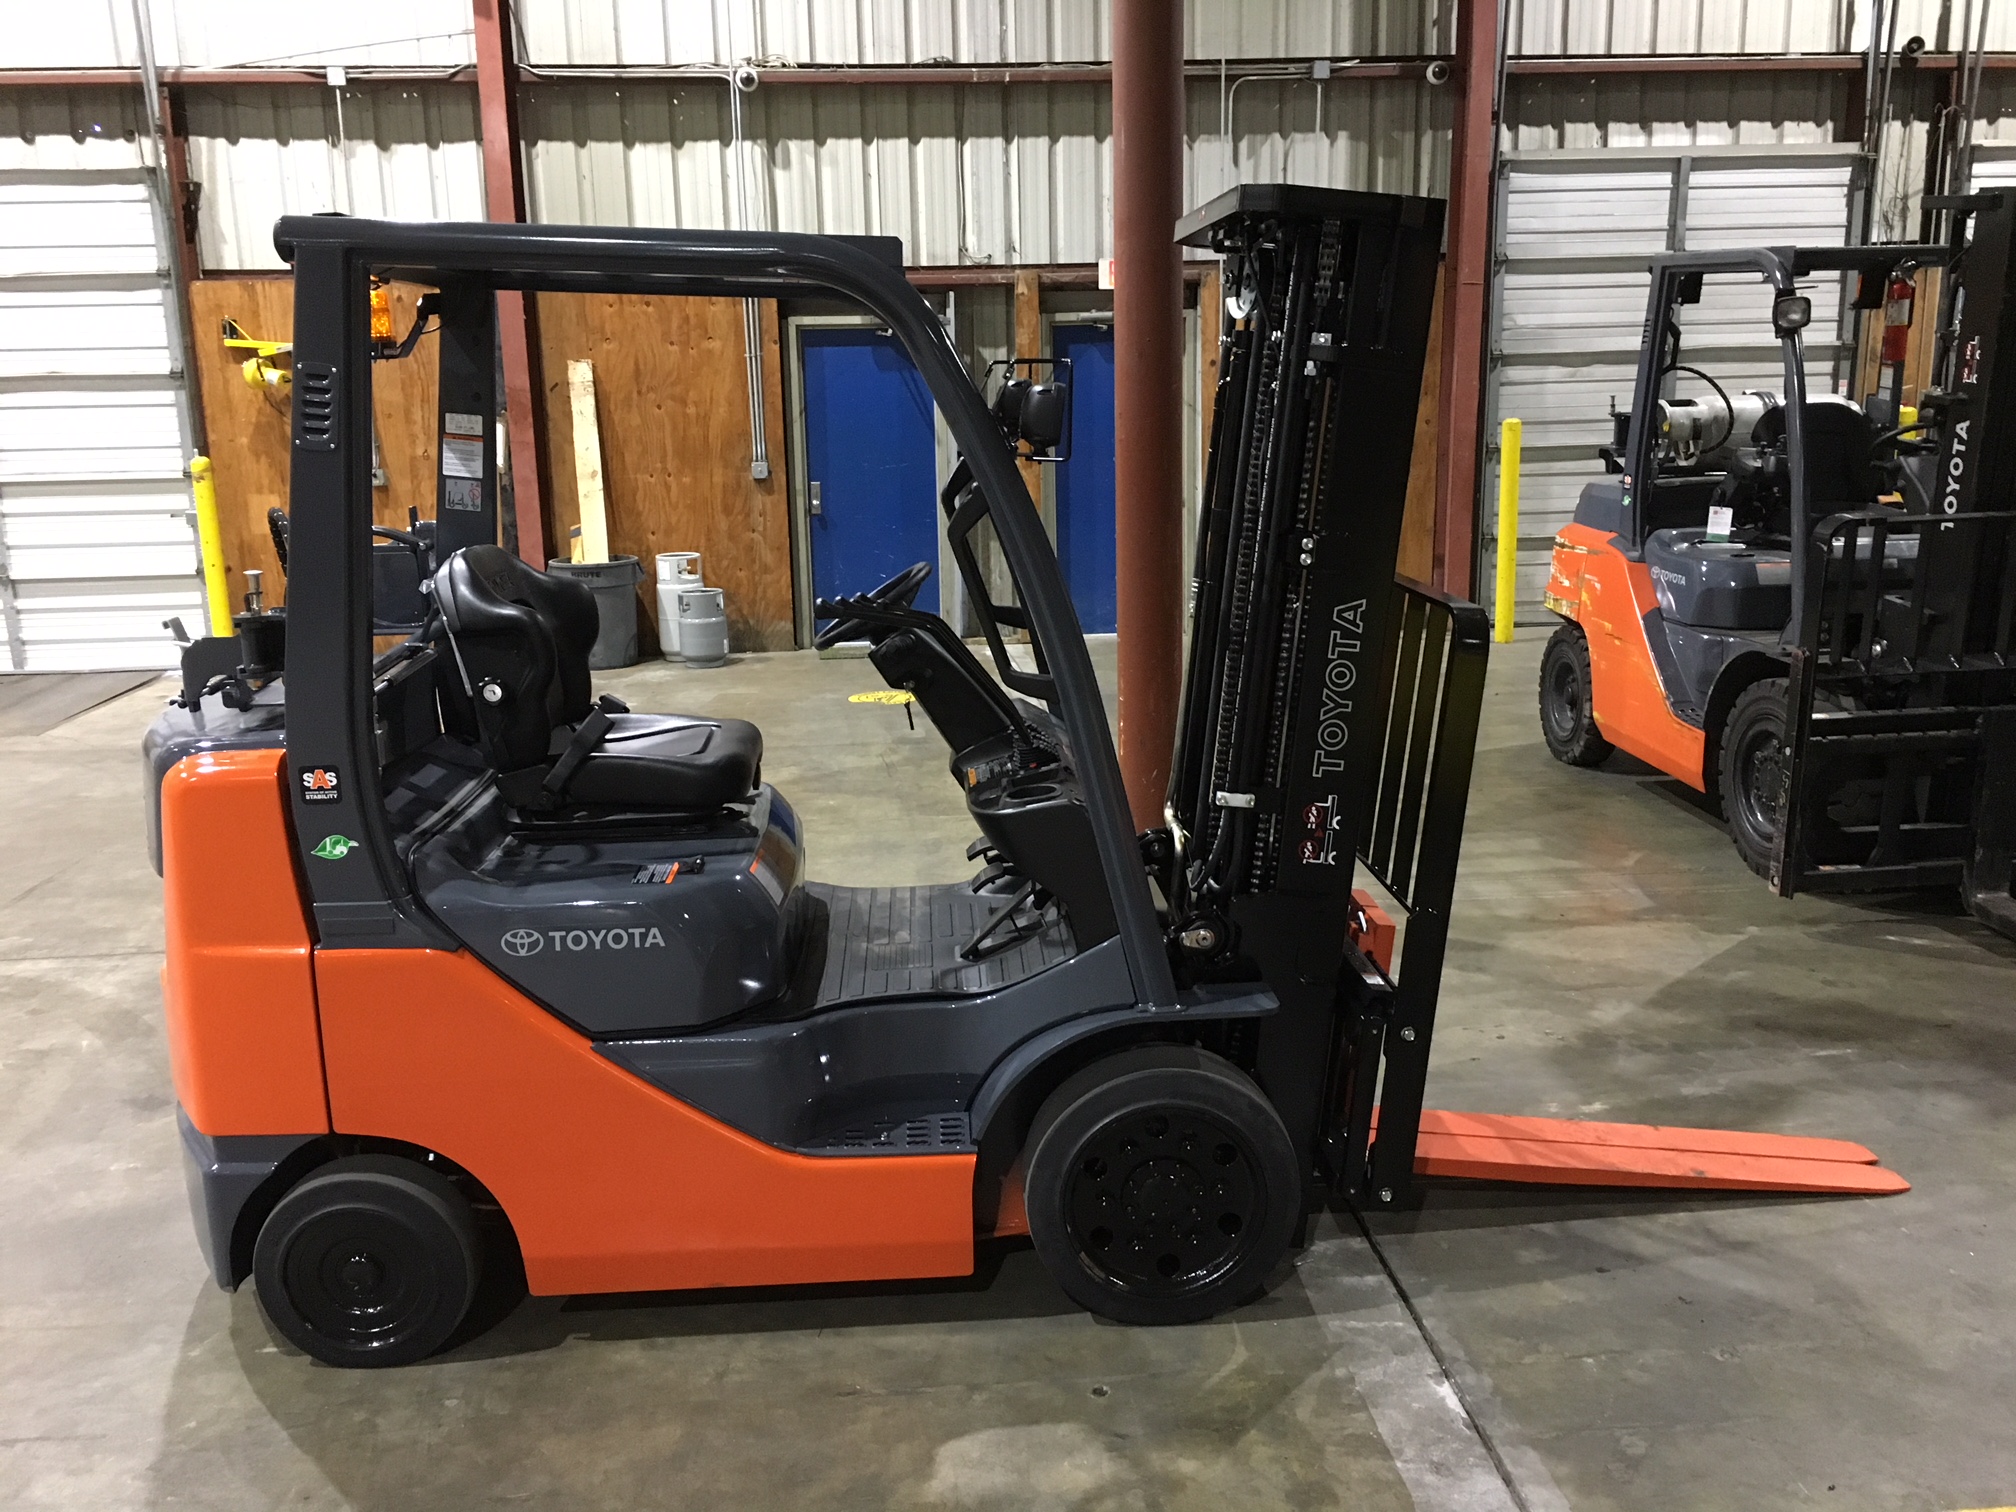 New 2017 Toyota Forklift 8fgcu25 Southeast Industrial Equipment